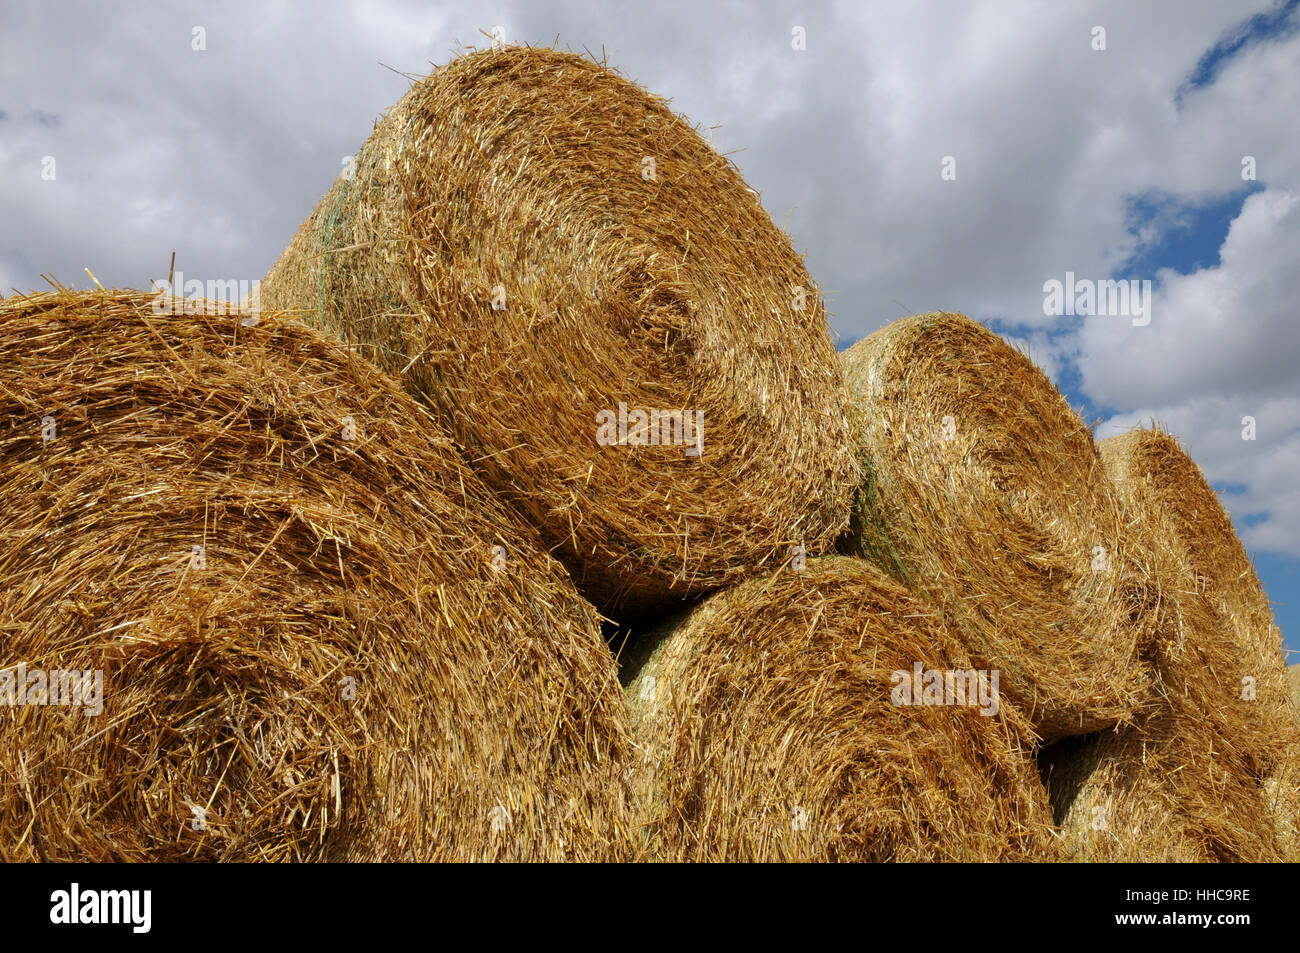 agriculture, farming, straw ball, straw, field work, agriculture, farming, Stock Photo